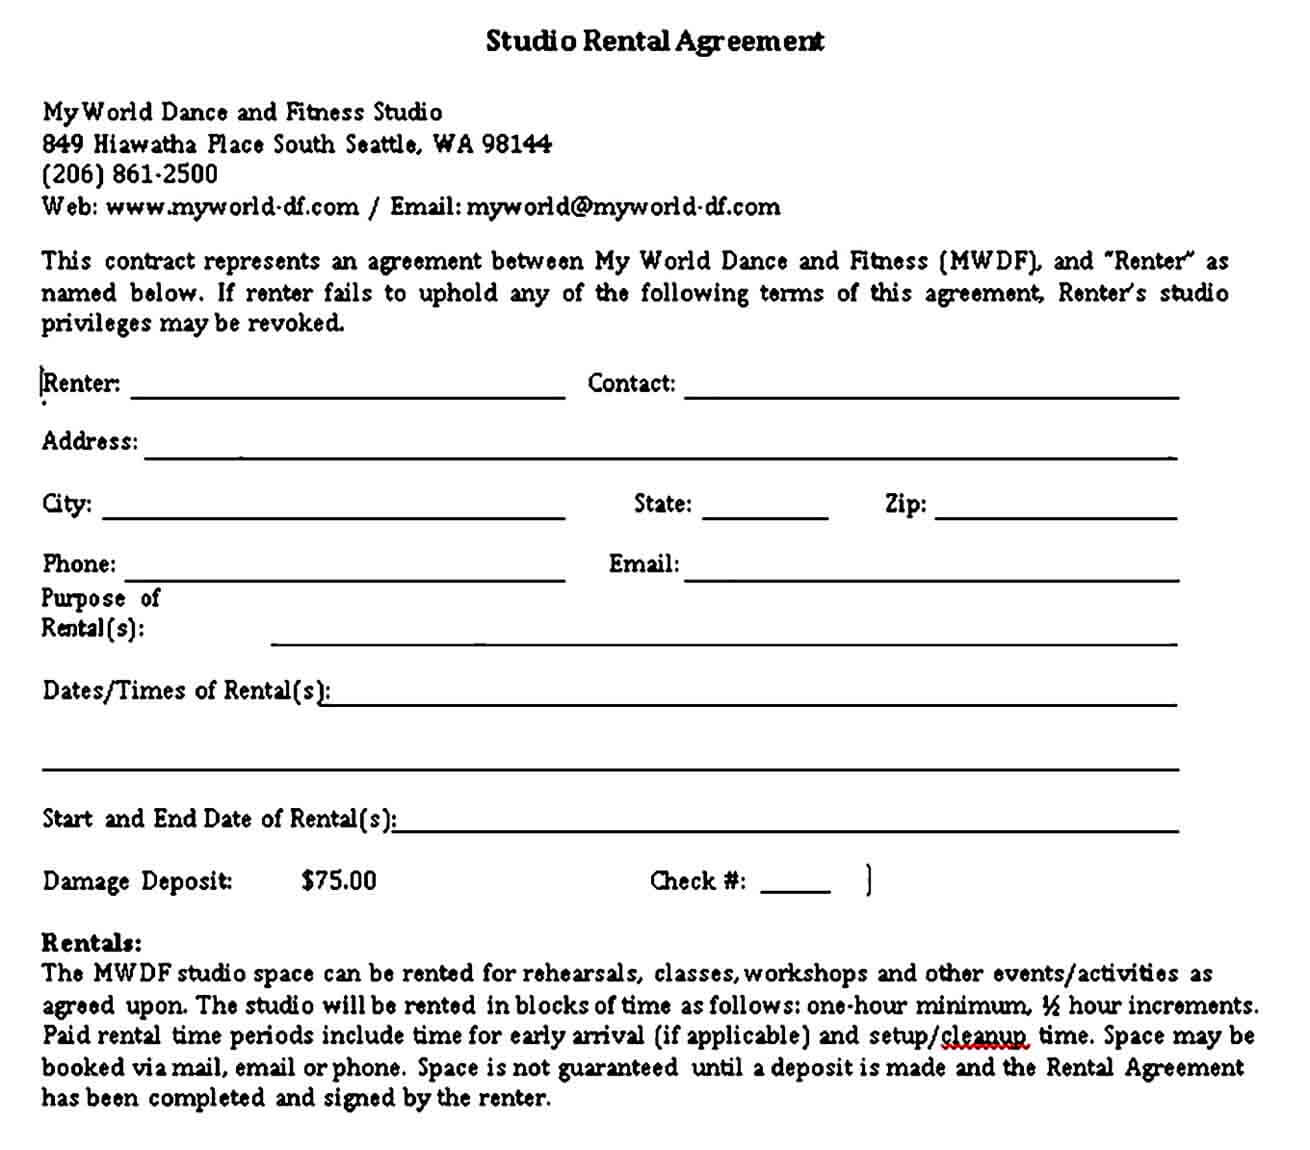 Studio Rental Agreement Sample